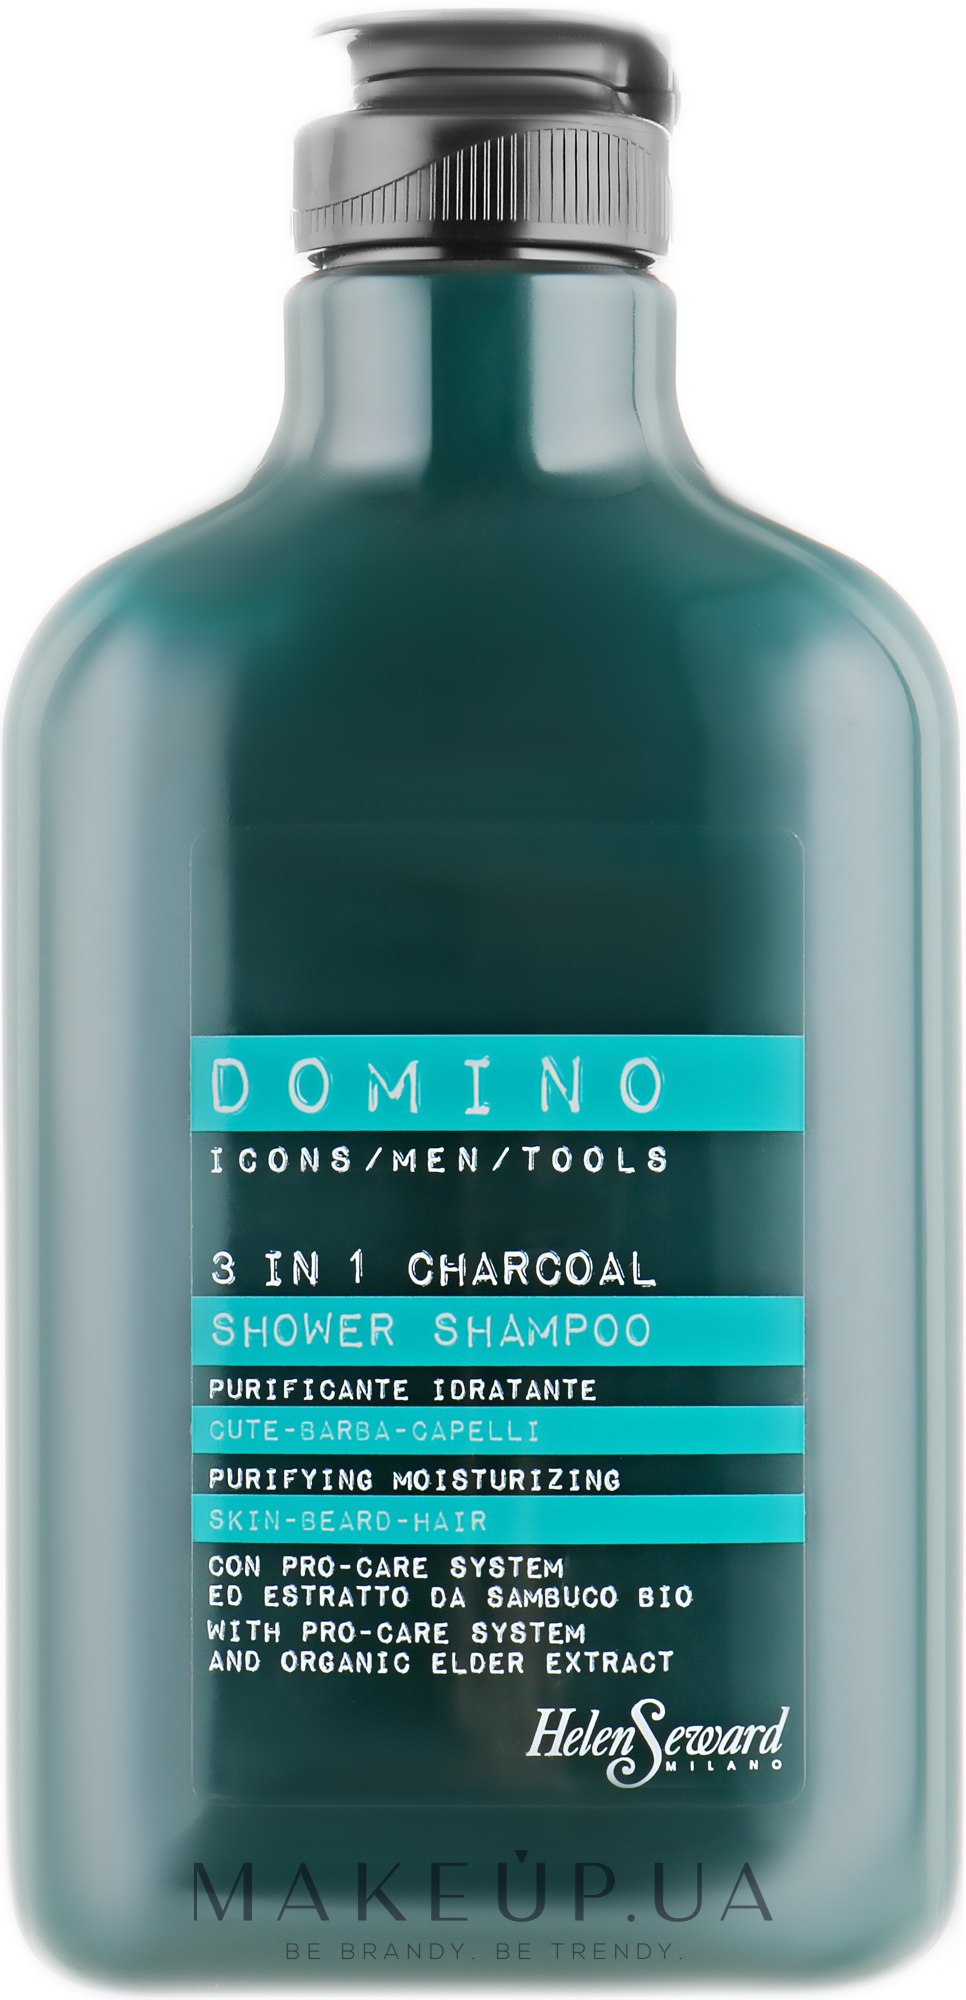 Шампунь-гель 3в1 с активированным углем - Helen Seward Domino Care 3 in 1 Charcoal Shower Shampoo — фото 250ml